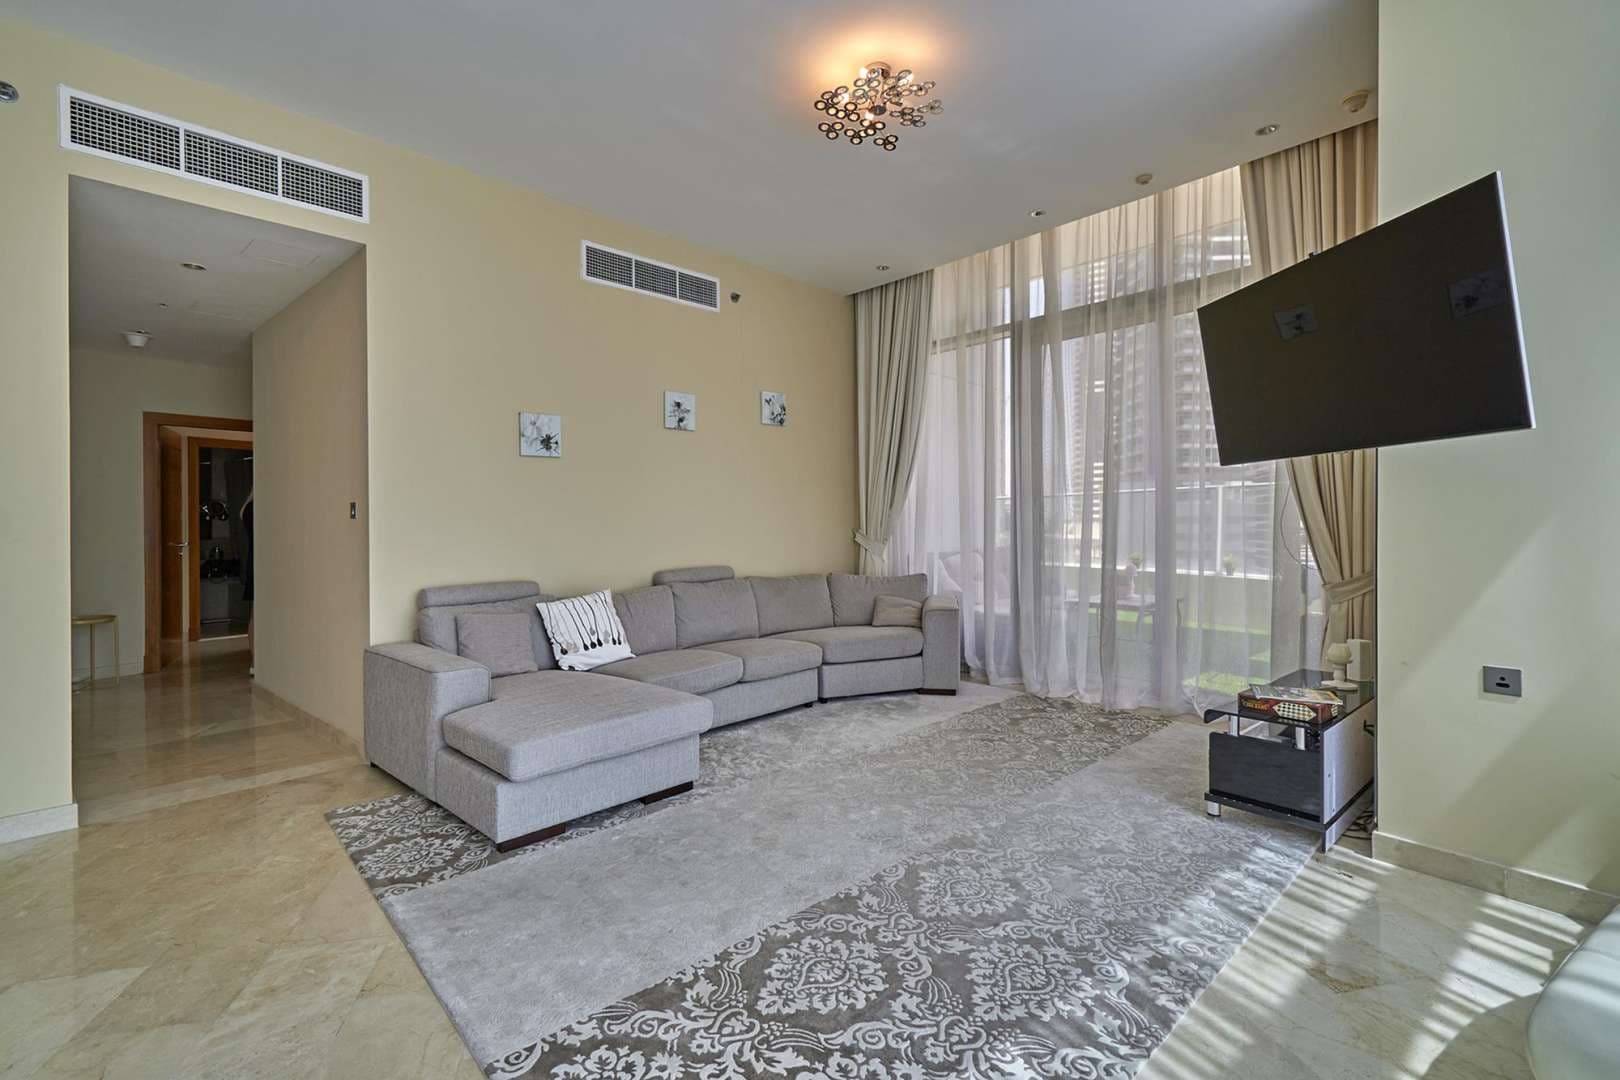  Bedroom Apartment For Rent Trident Grand Residence Lp05942 31f7972bbcc84e0.jpg